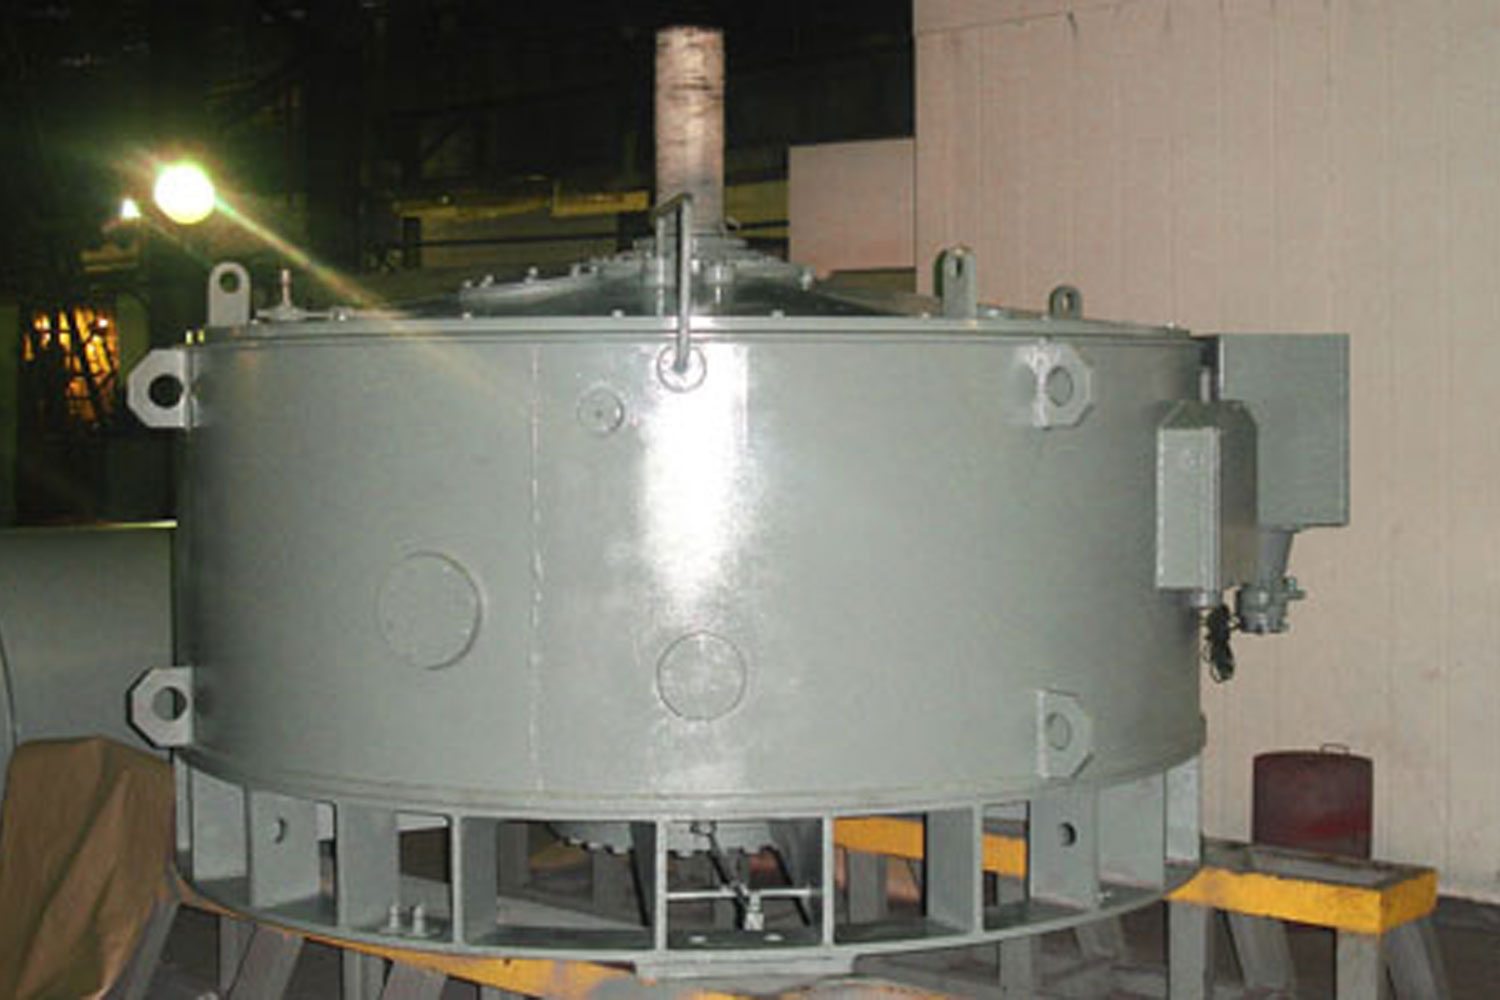 ВАСВ special vertical water-cooled motors